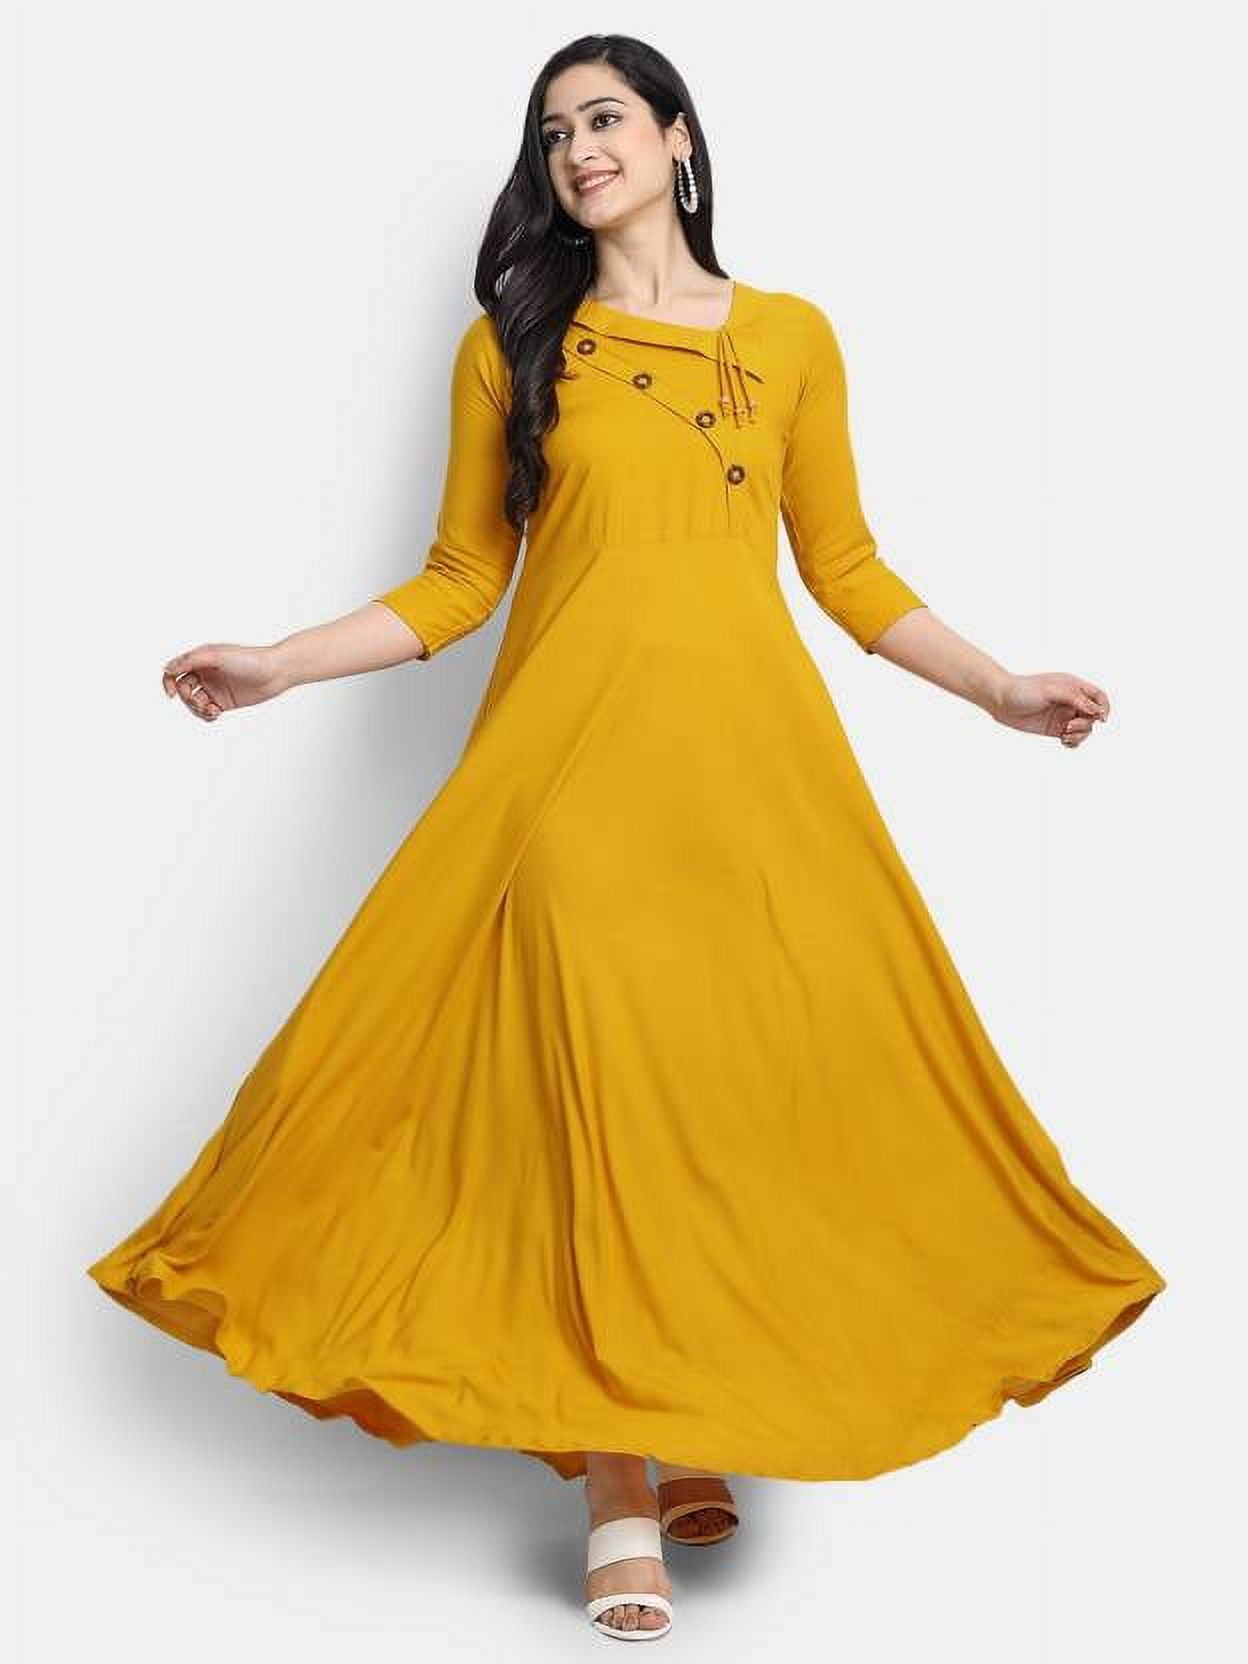 Psyna - Floral maxi dress | Diva Dove Online Clothing Stores Dubai